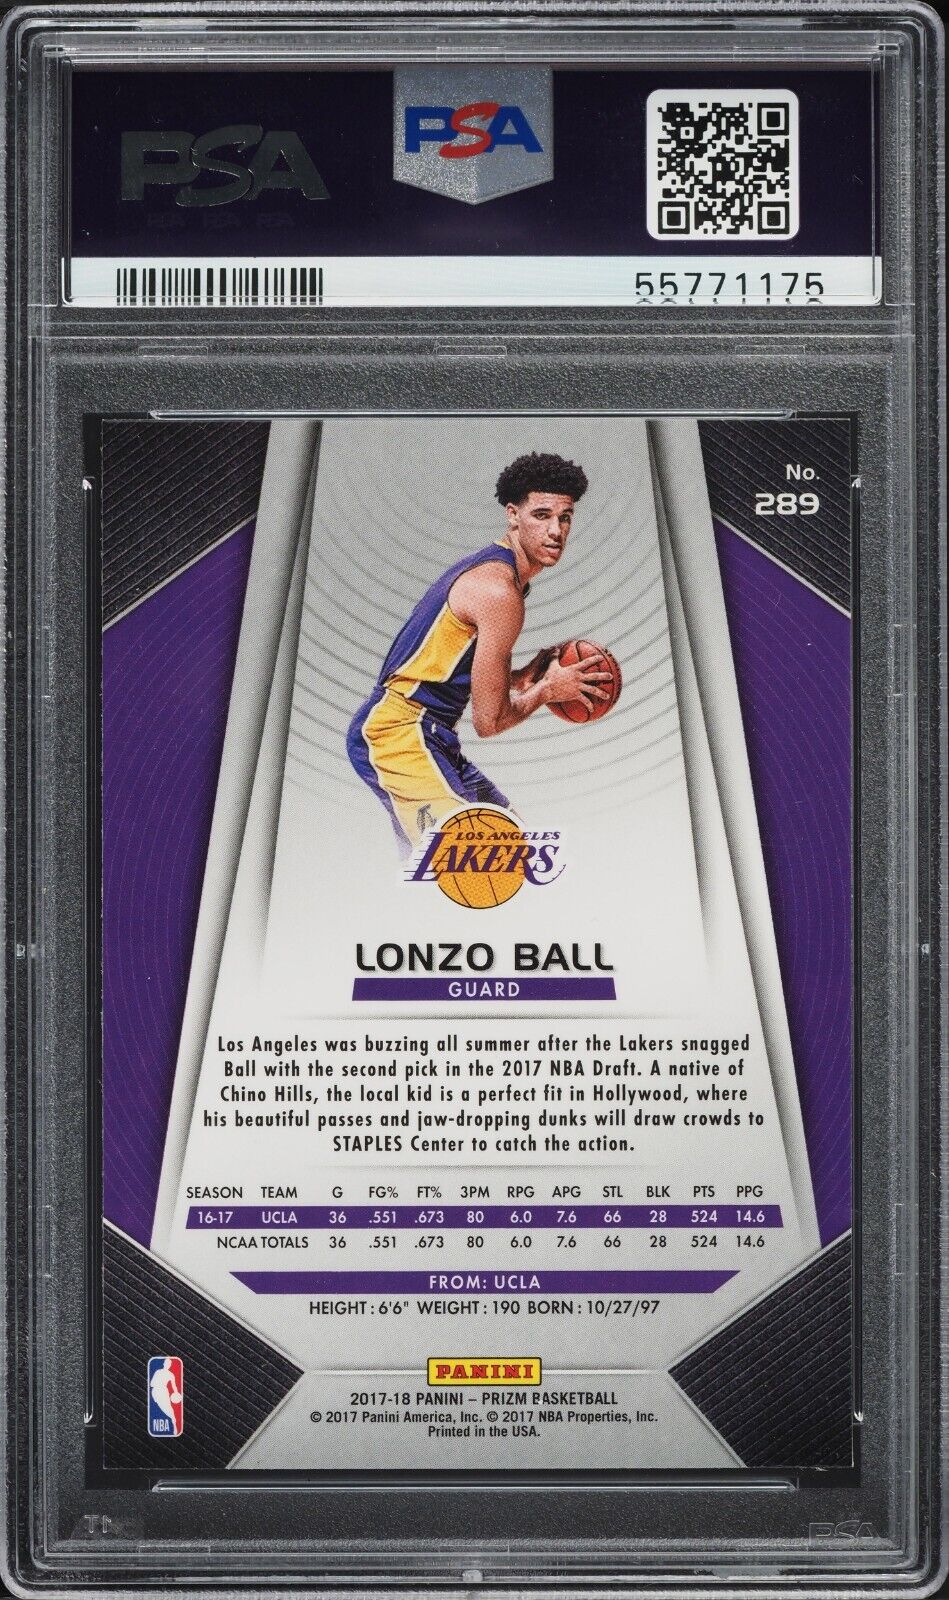 2017/18 Panini Prizm Basketball #289 Lonzo Ball Rookie Card RC PSA 10 - 643-collectibles